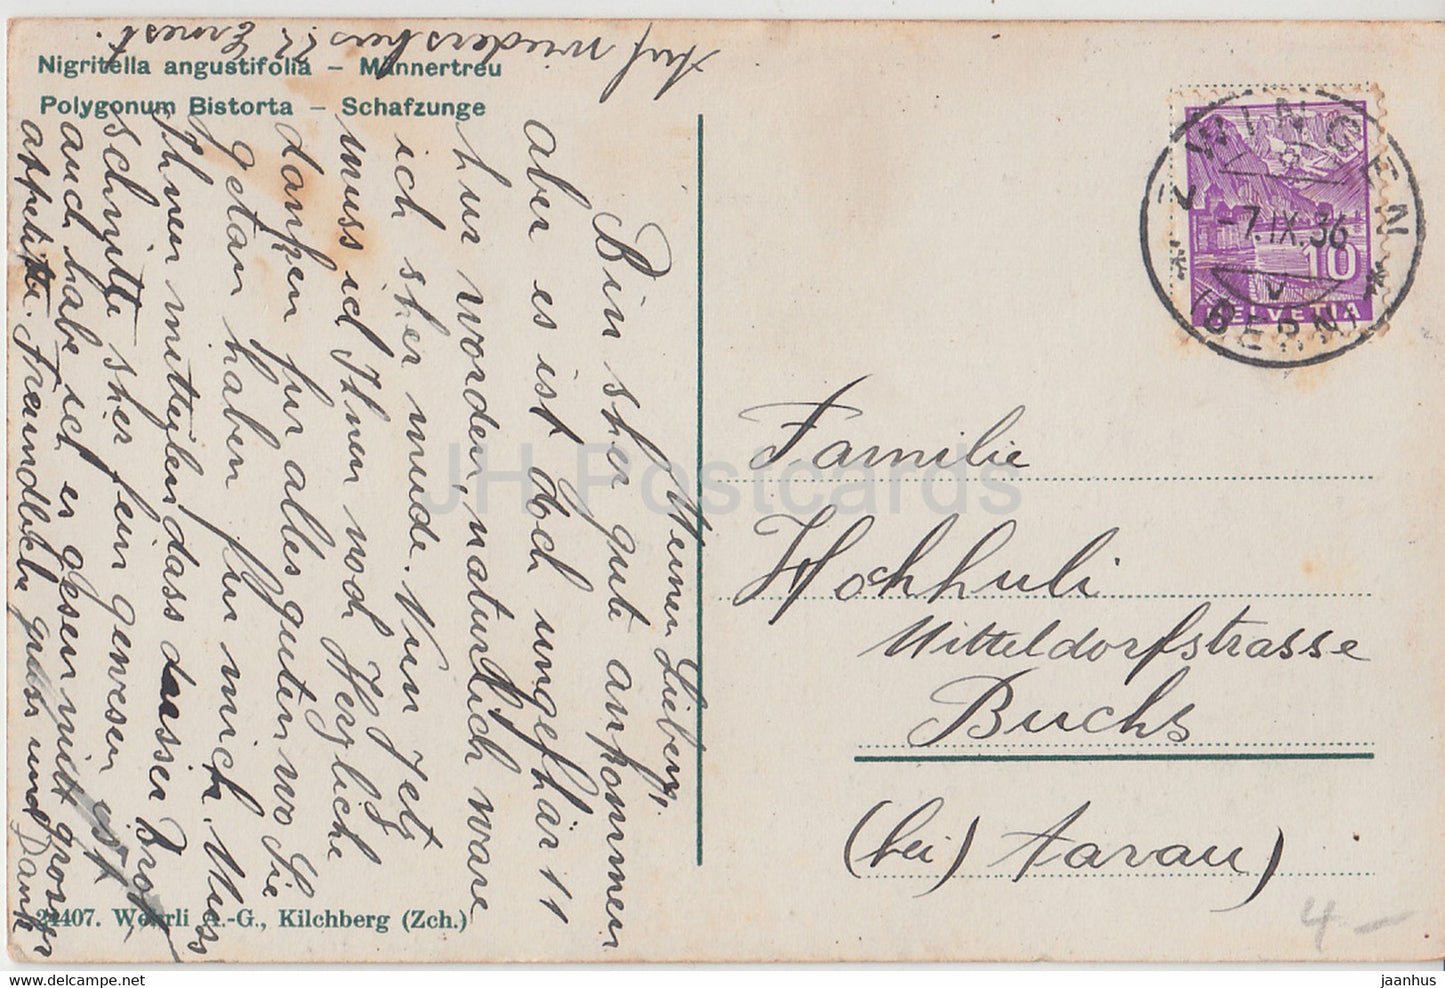 Nigritella angustifolia - Mannertreu - Polygonum Bistrota - fleurs - 24407 - carte postale ancienne - 1936 - Suisse - utilisé